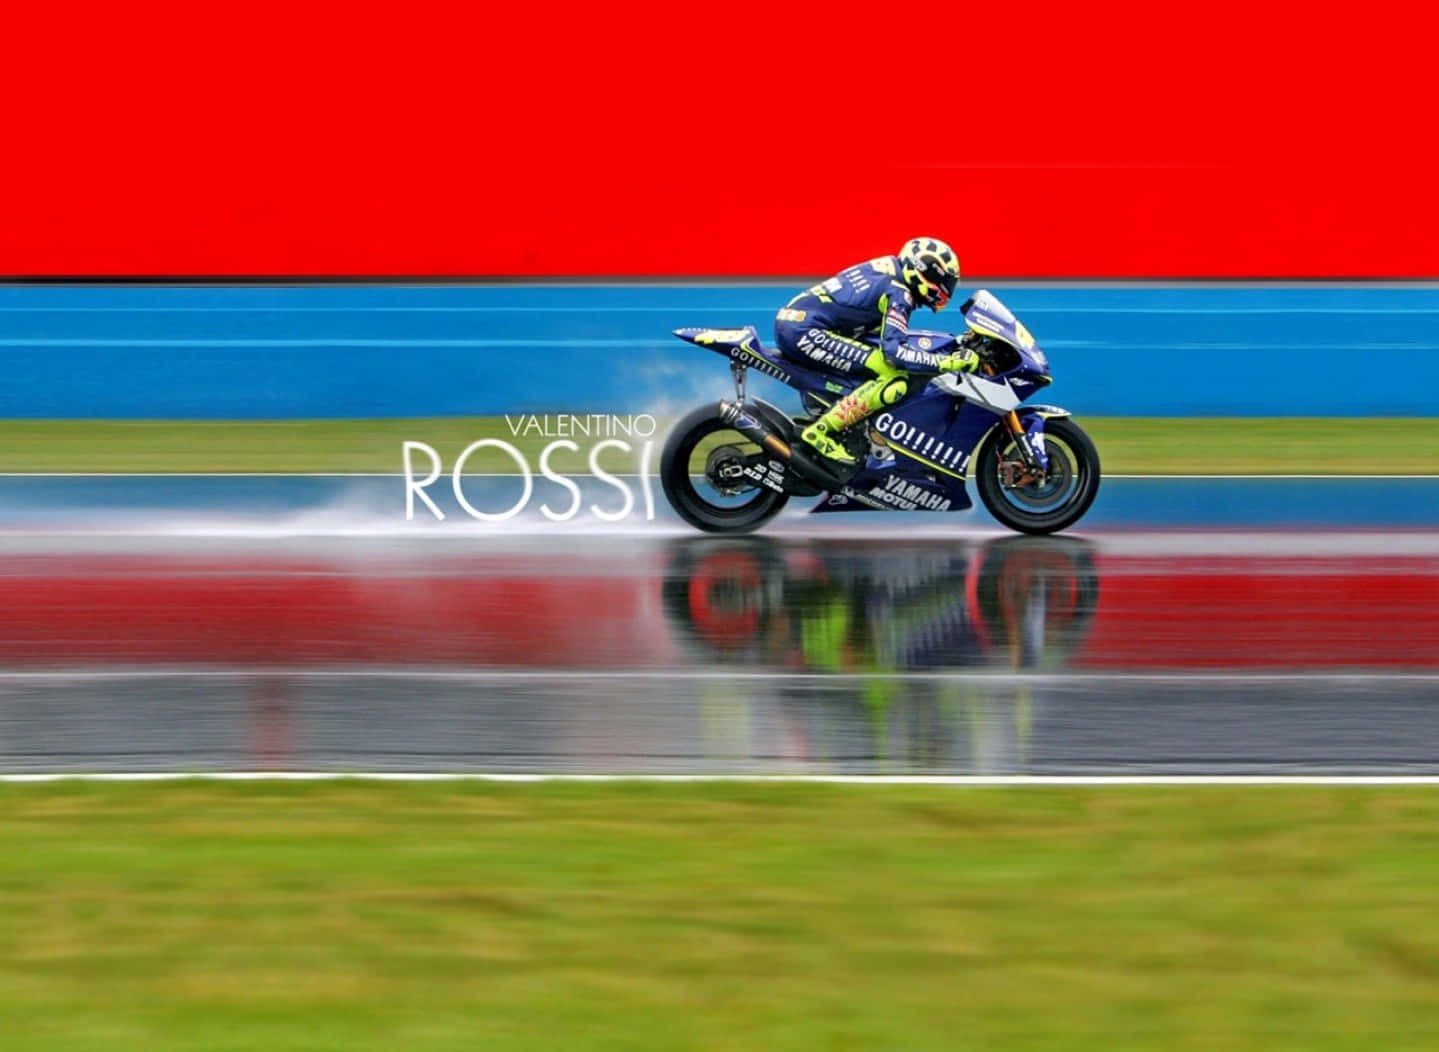 Vr46 Racing Poster Rossi